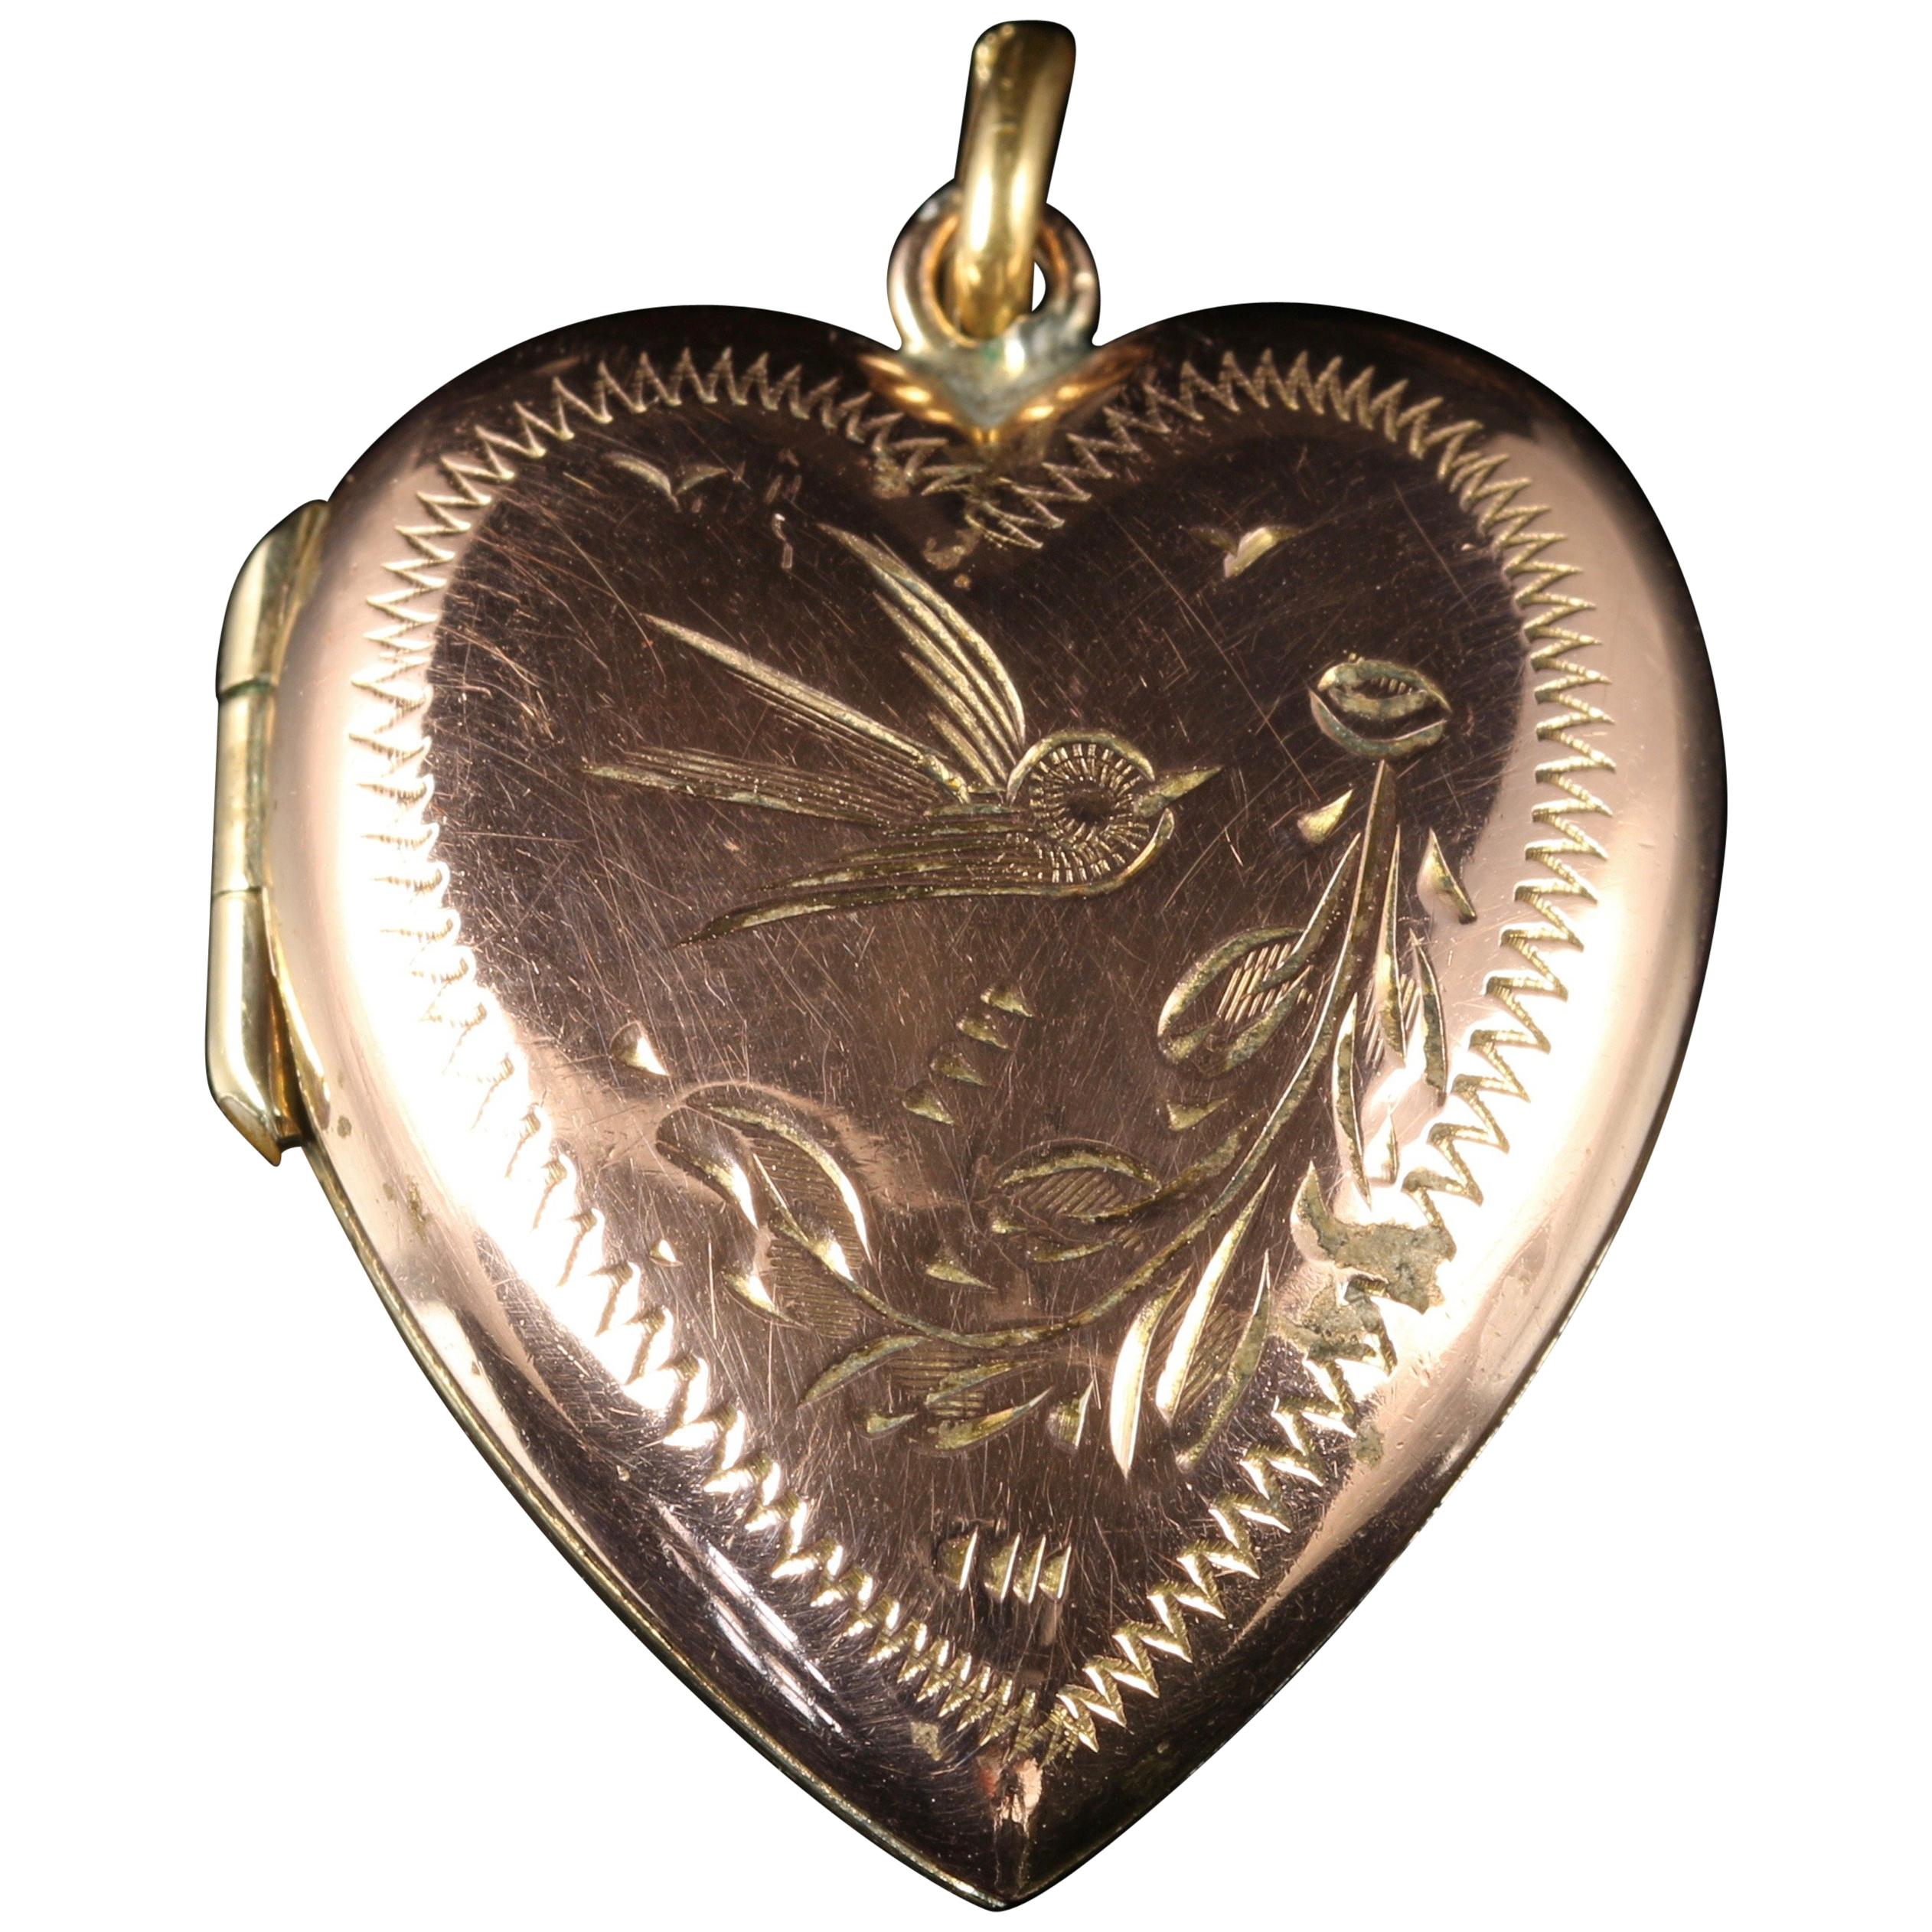 Antique Victorian Gold Heart Locket, circa 1880